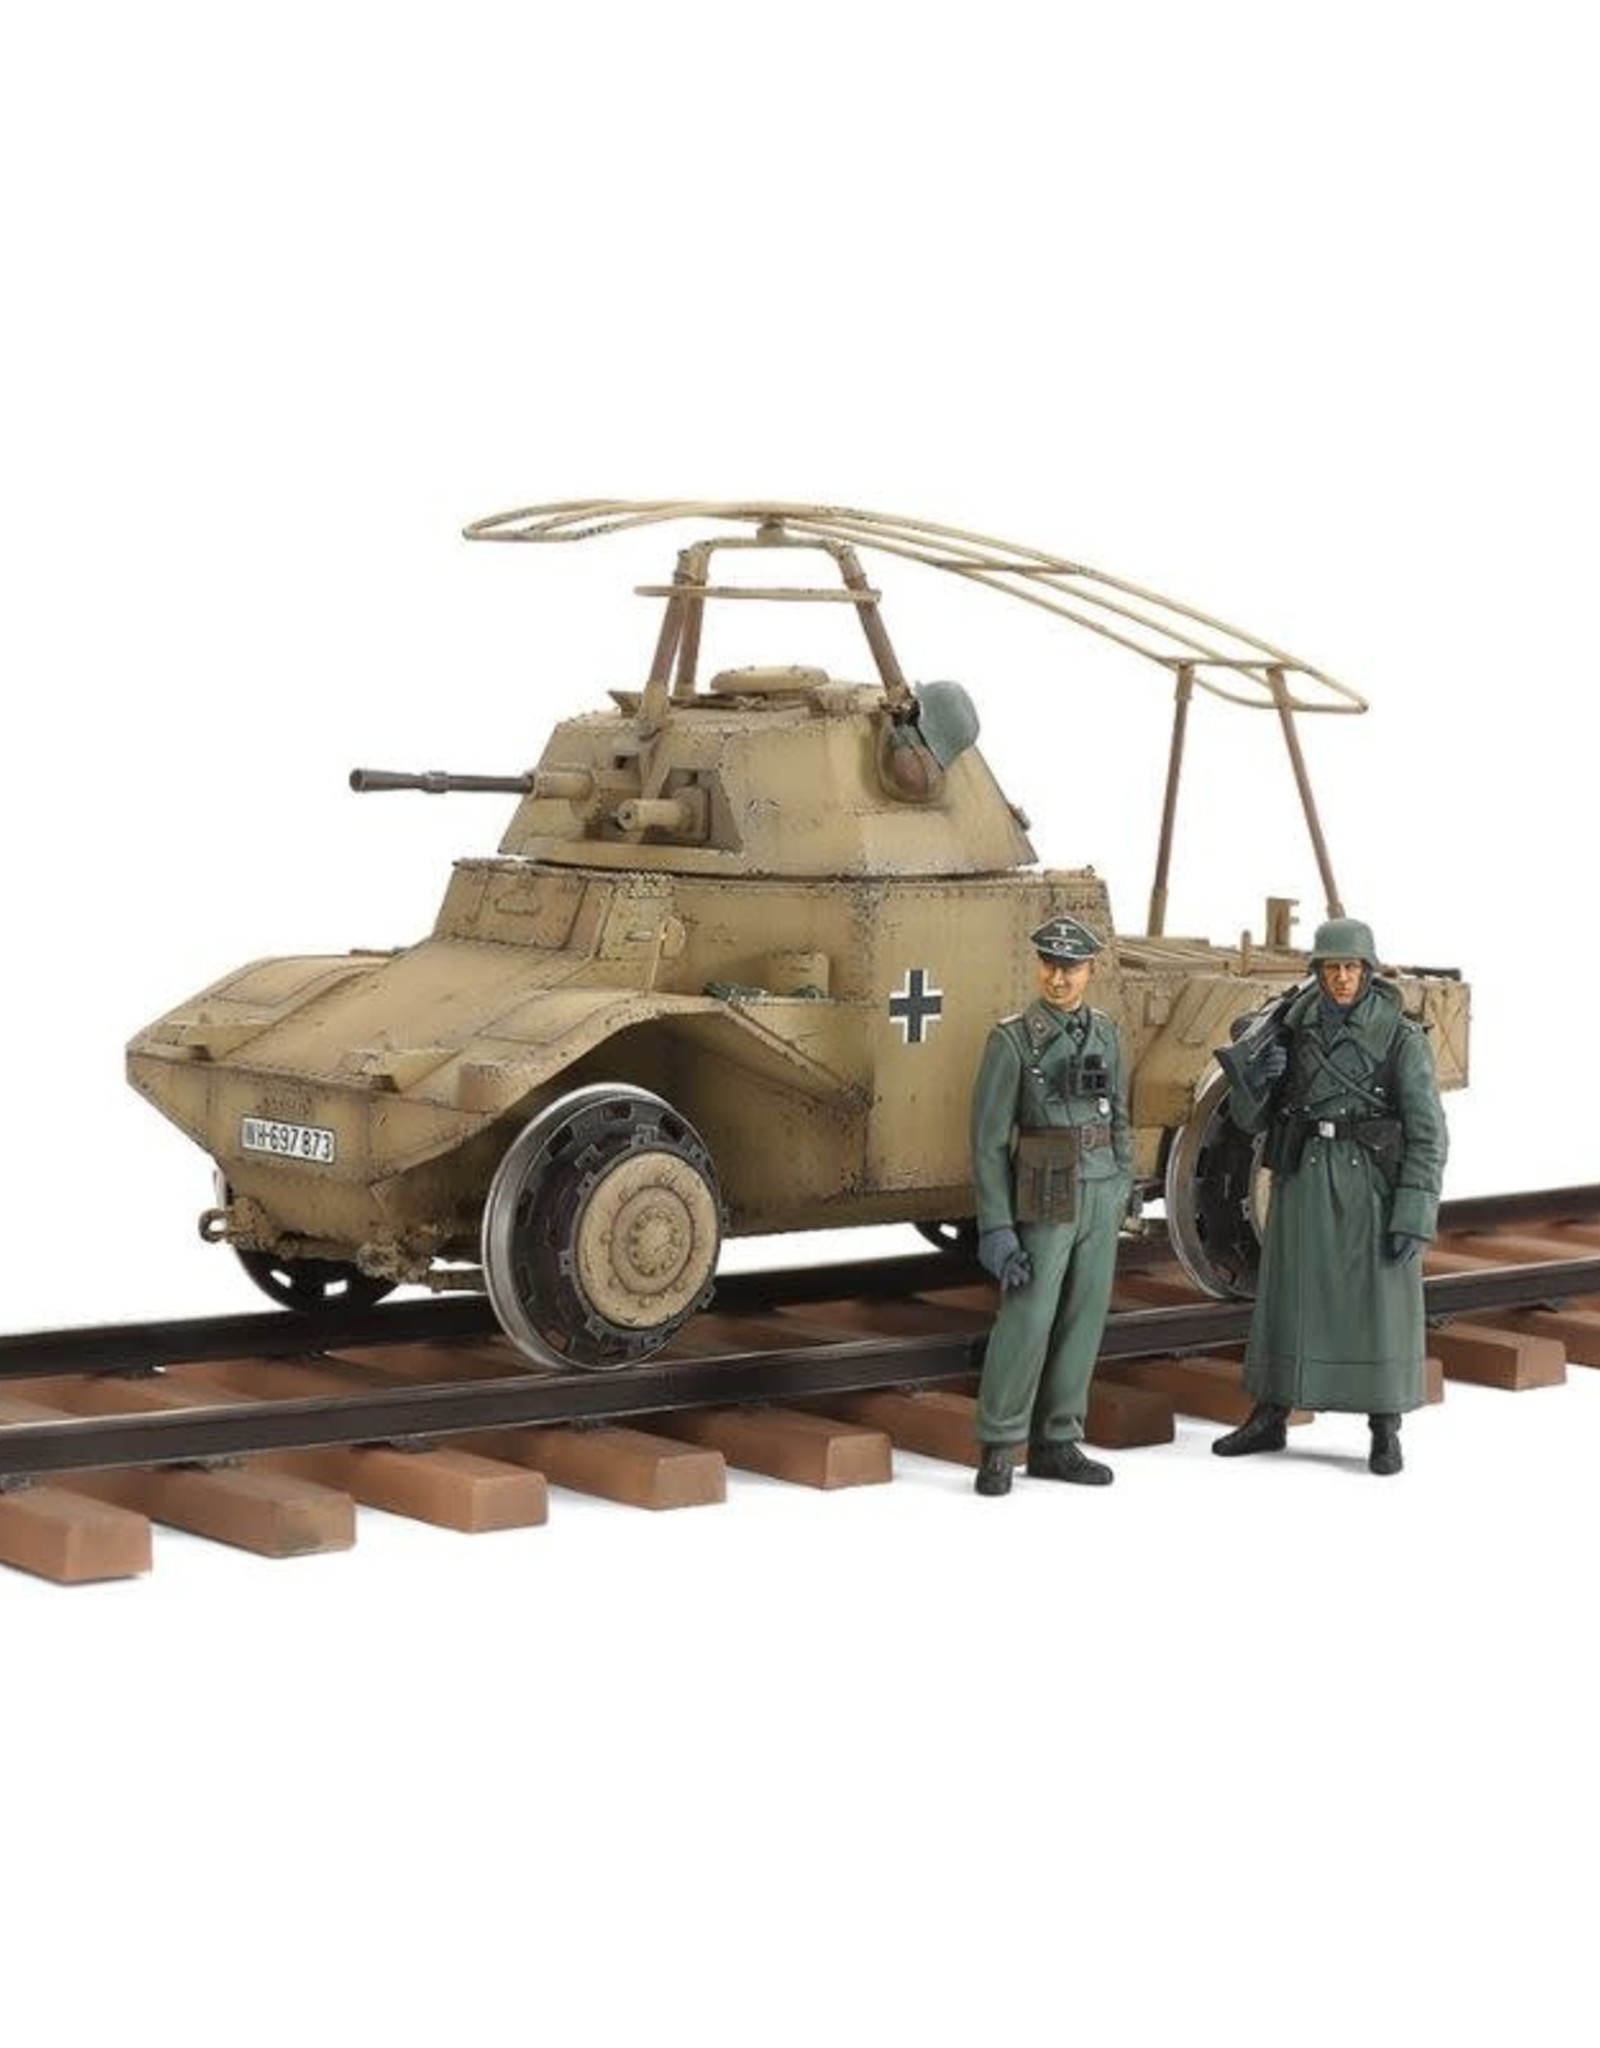 German Armored Railway Vehicle